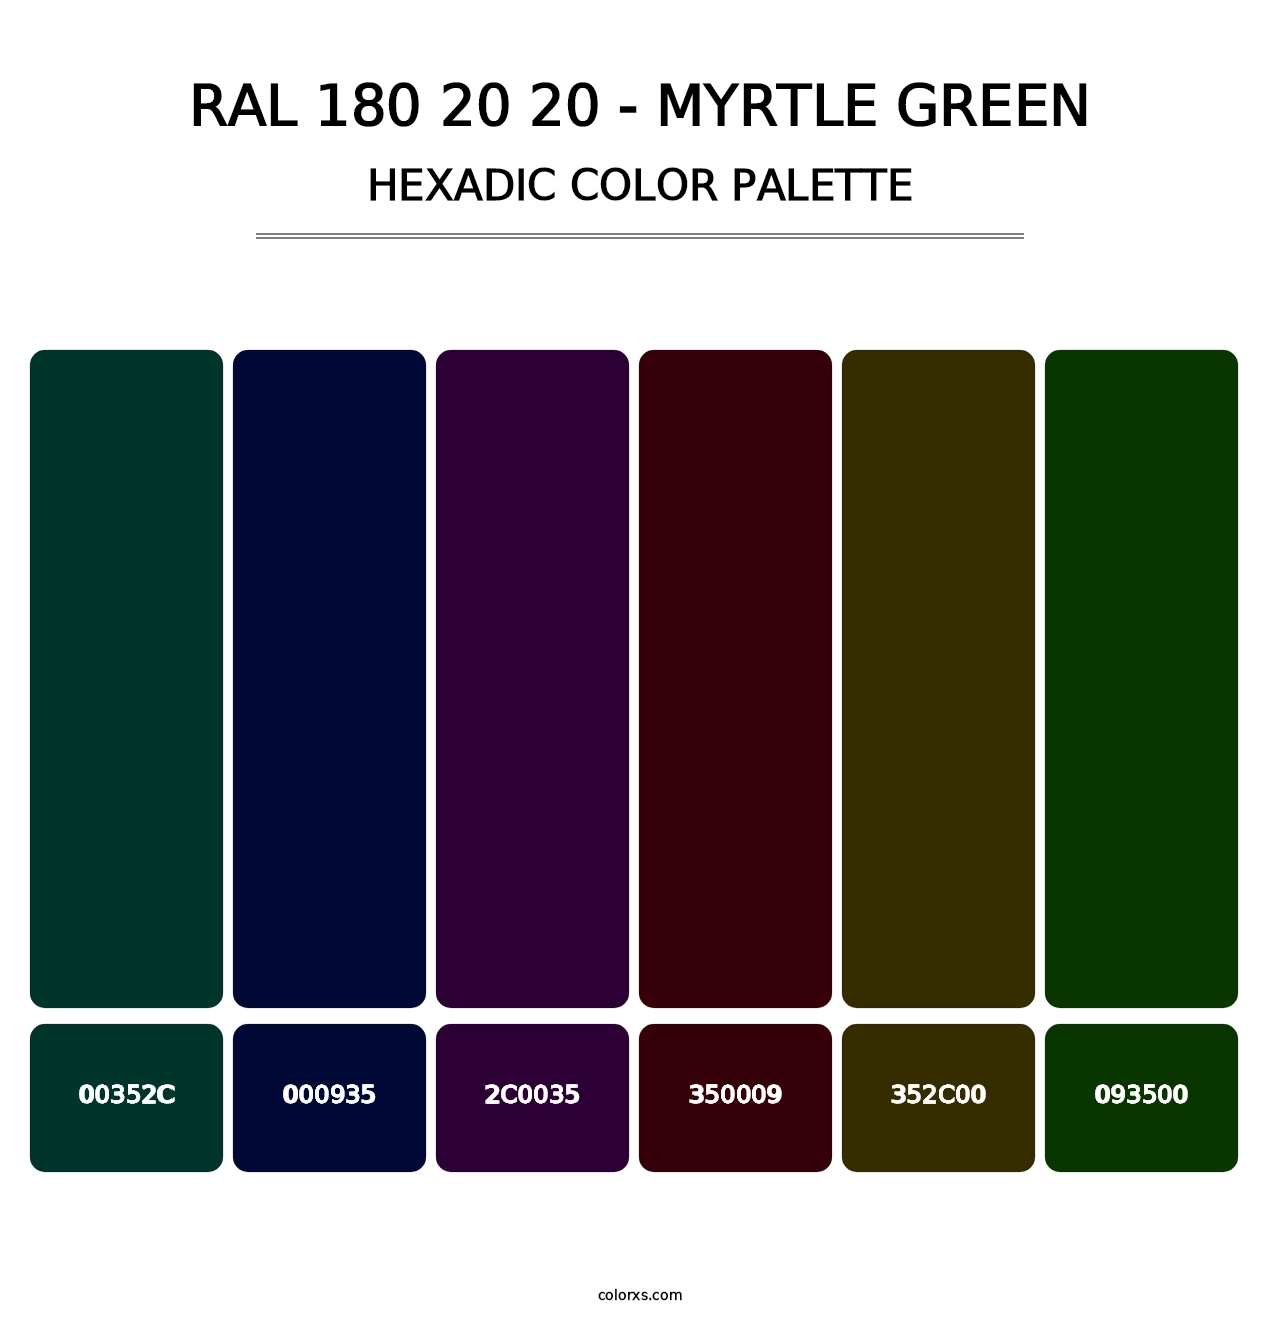 RAL 180 20 20 - Myrtle Green - Hexadic Color Palette